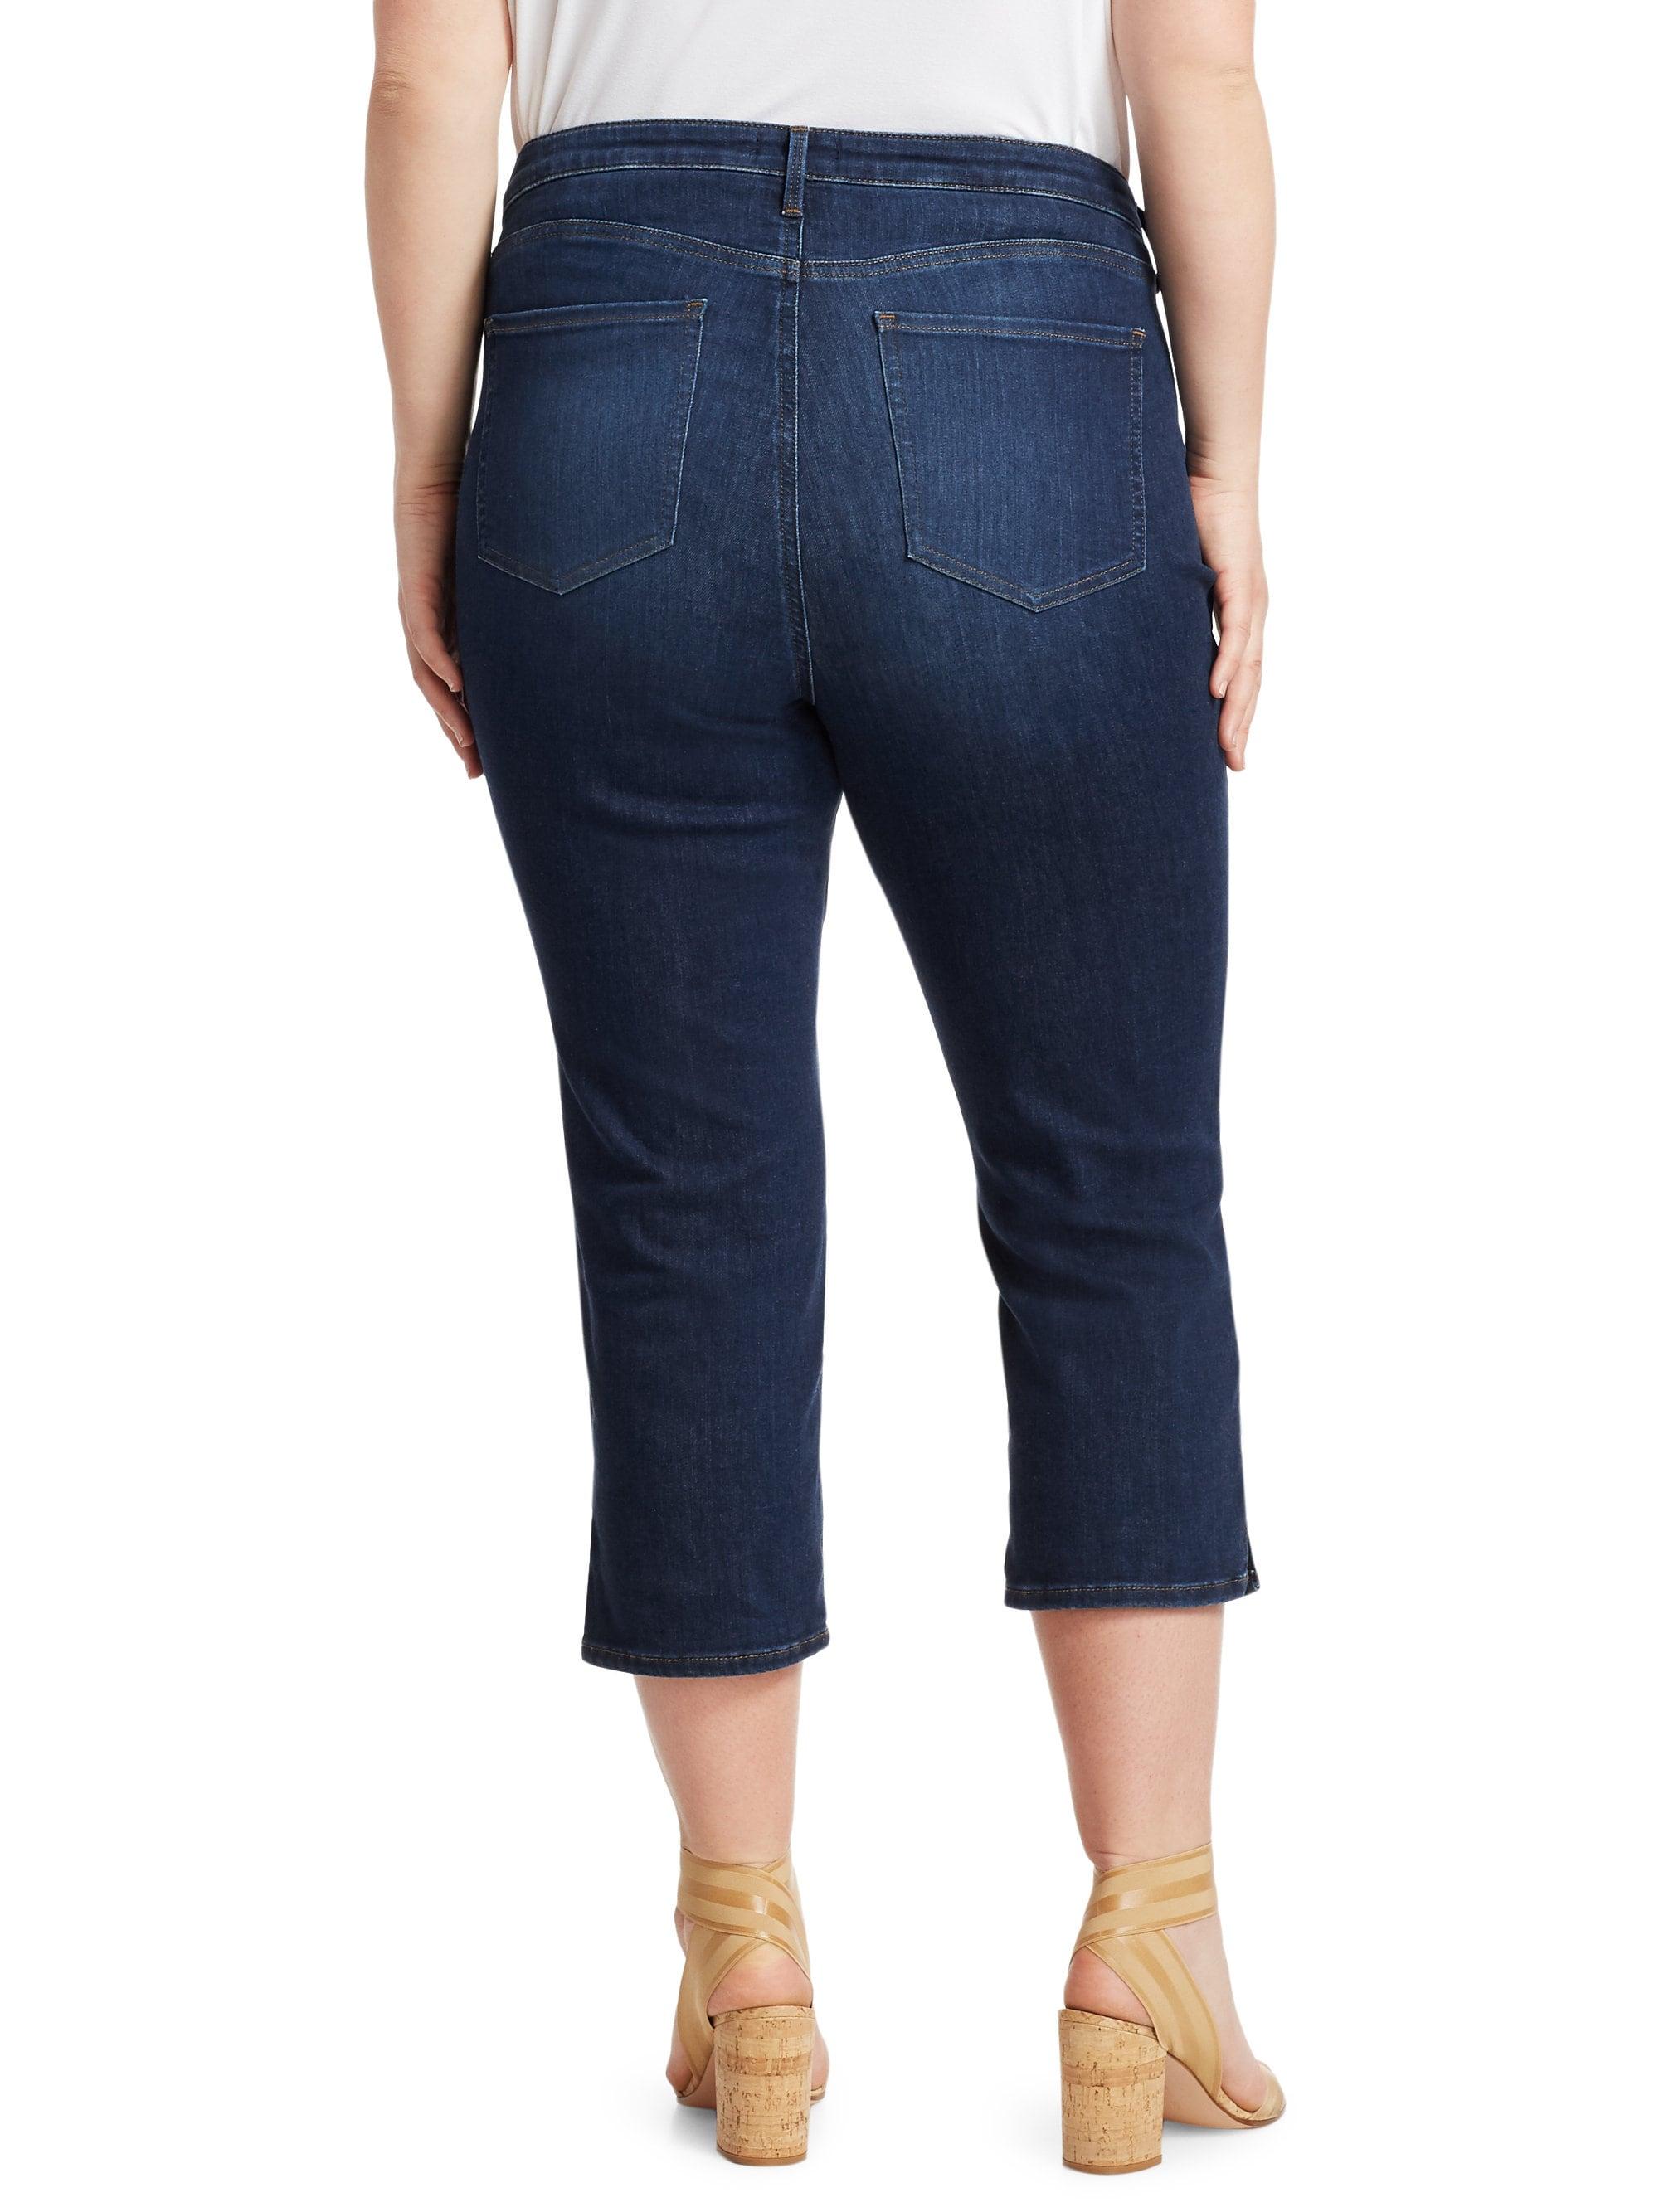 NYDJ Capri Side Slit Jeans in Blue - Lyst